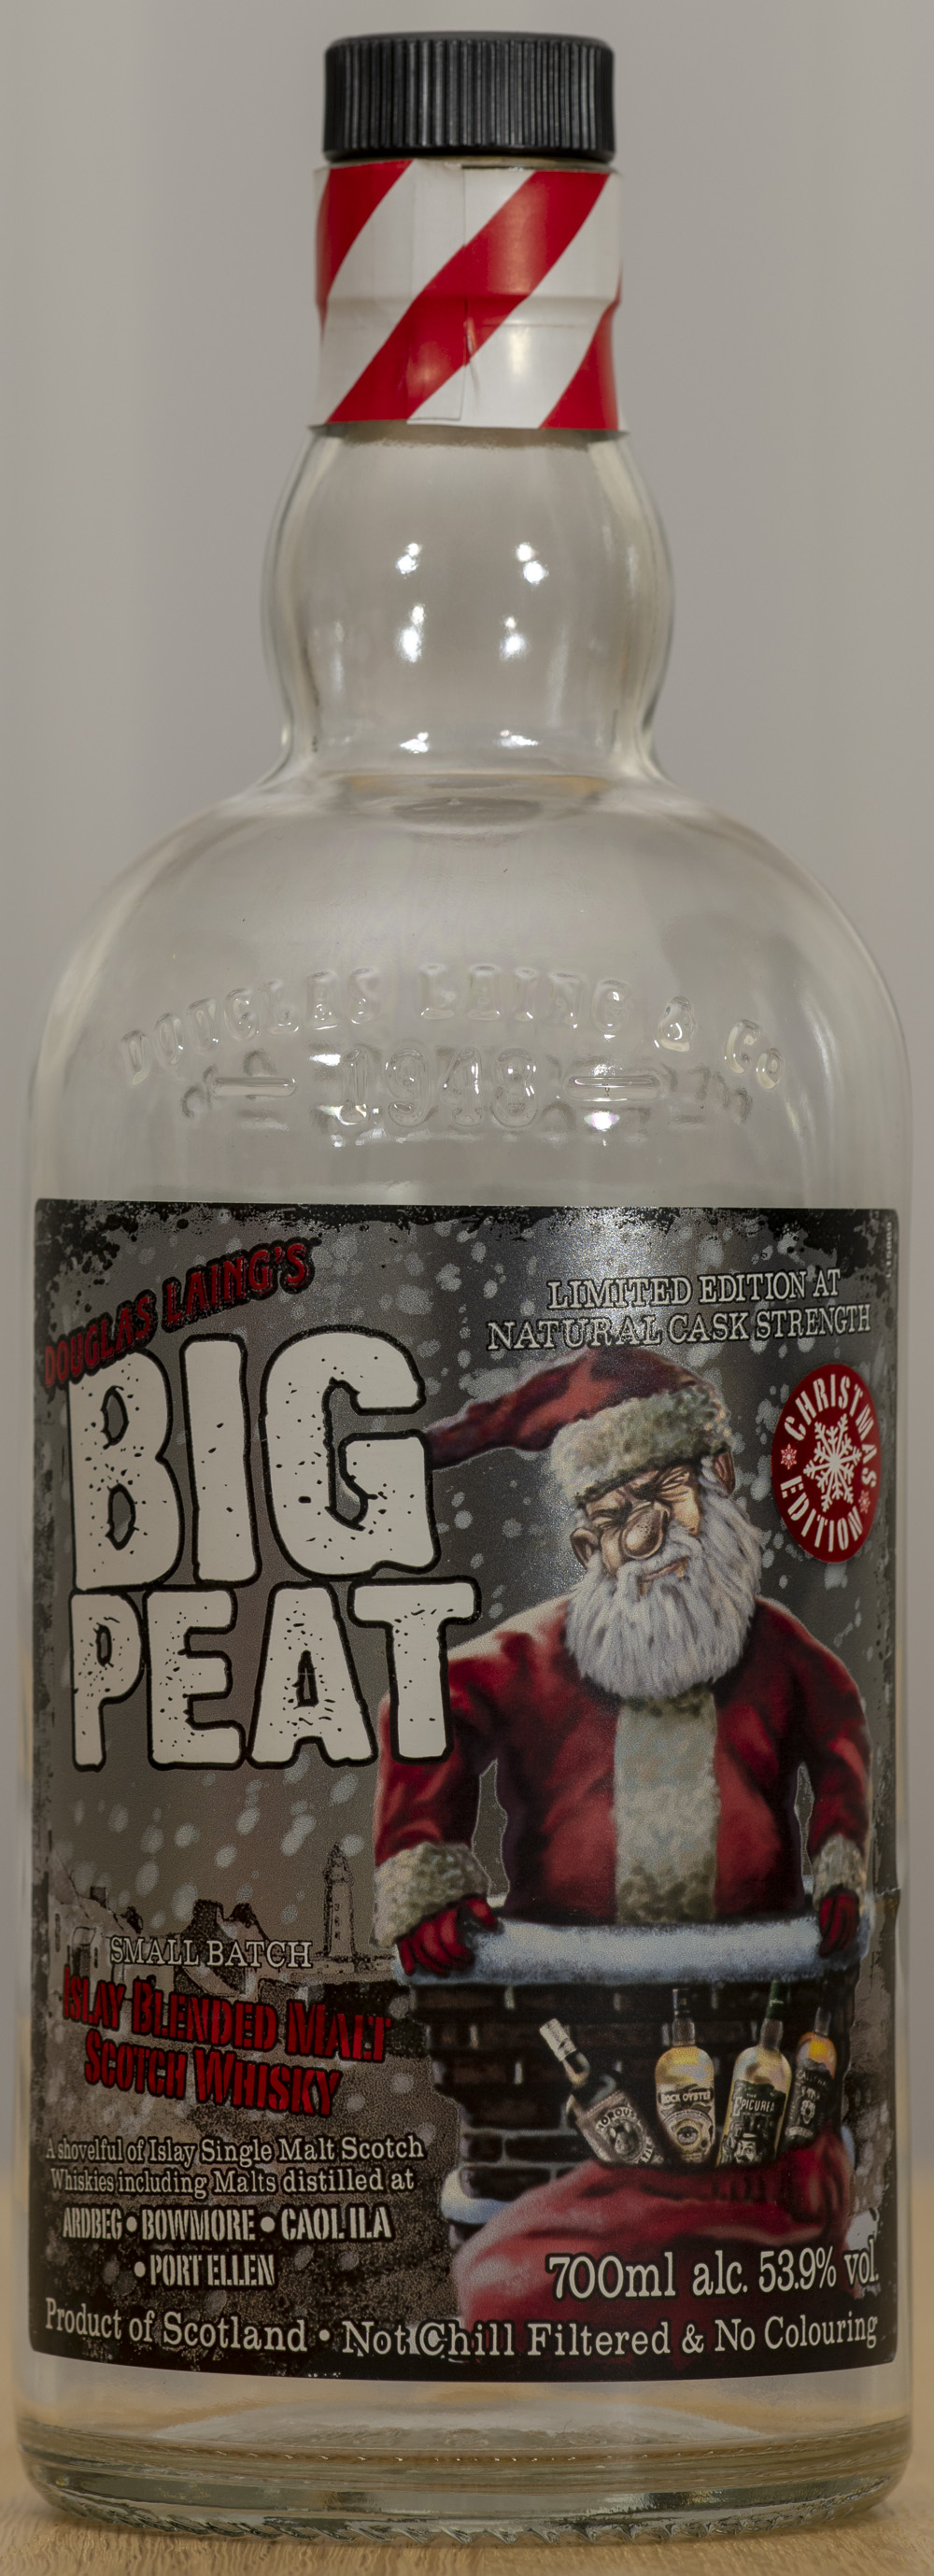 Billede: PHC_1566 - Big Peat Christmas Edition 2018 - bottle front.jpg